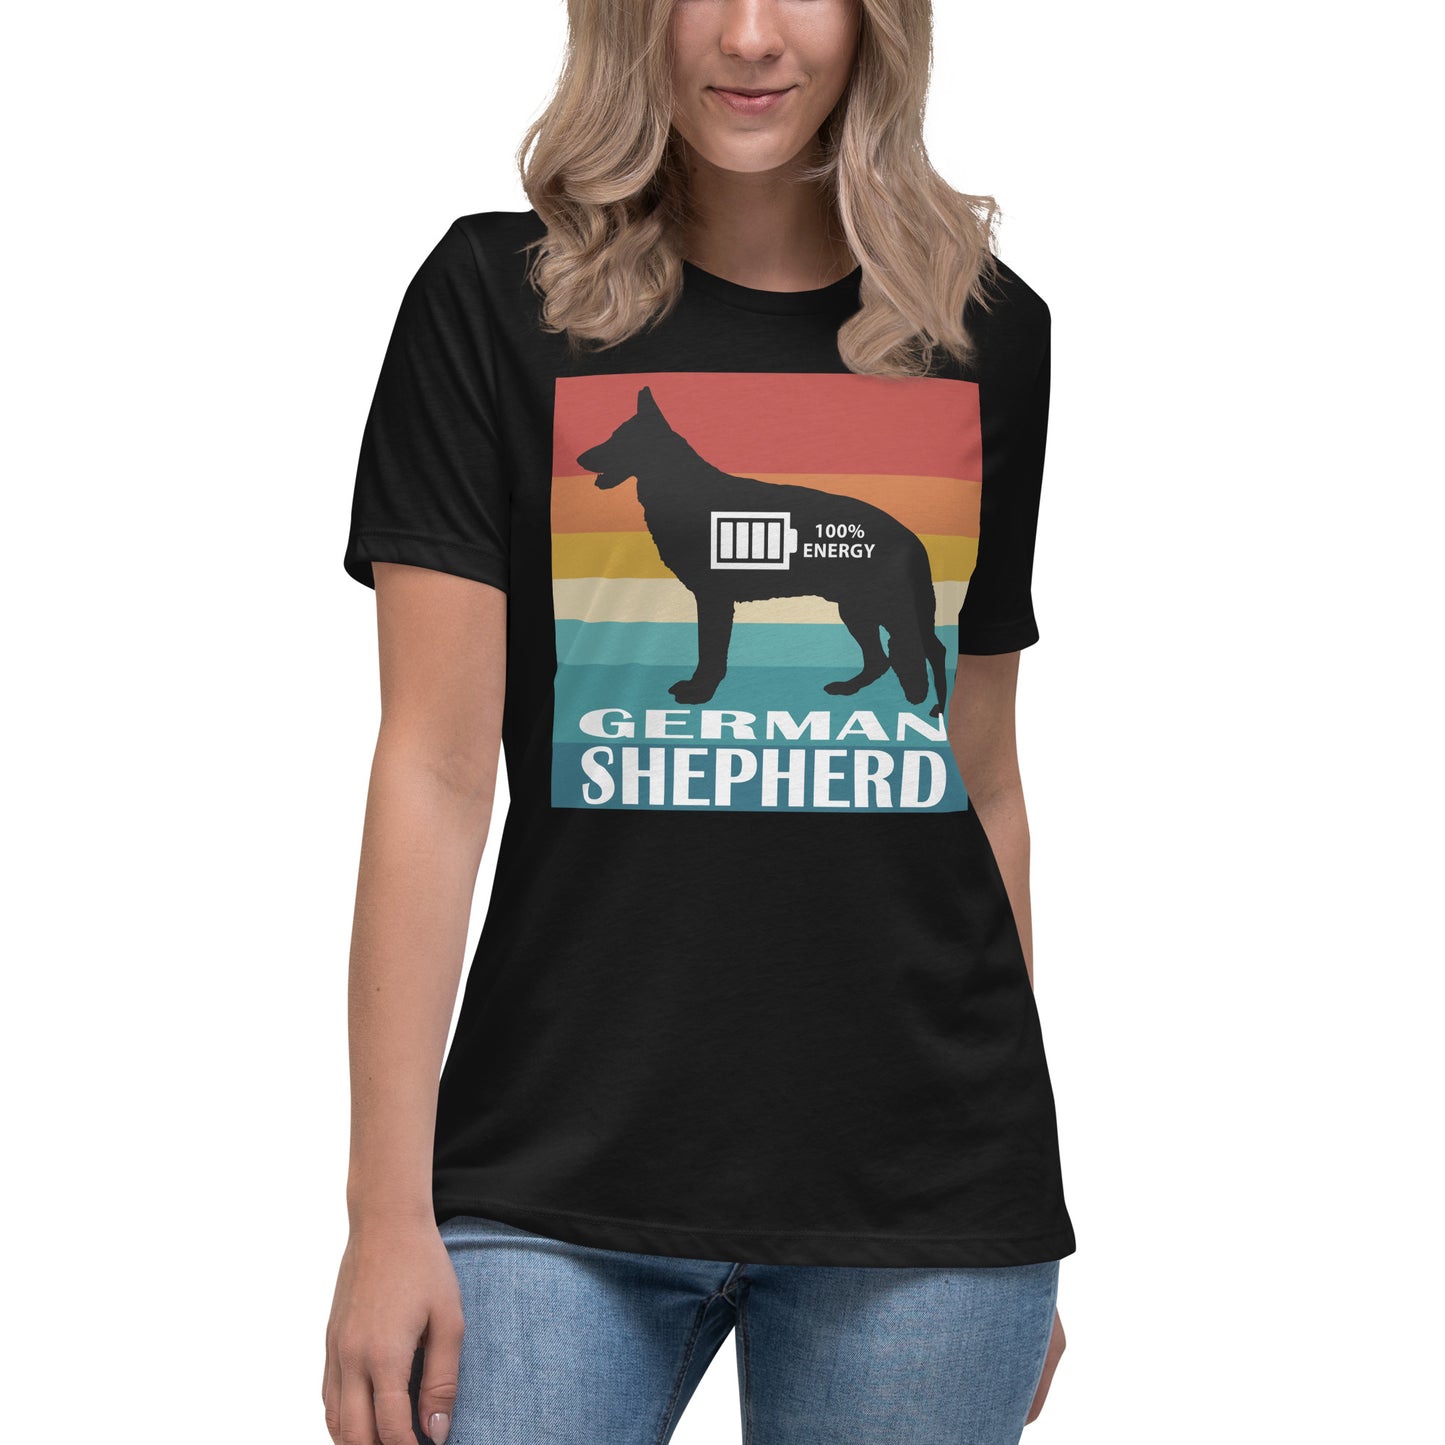 German Shepherd 100% Energy Women's Relaxed T-Shirt by Dog Artistry